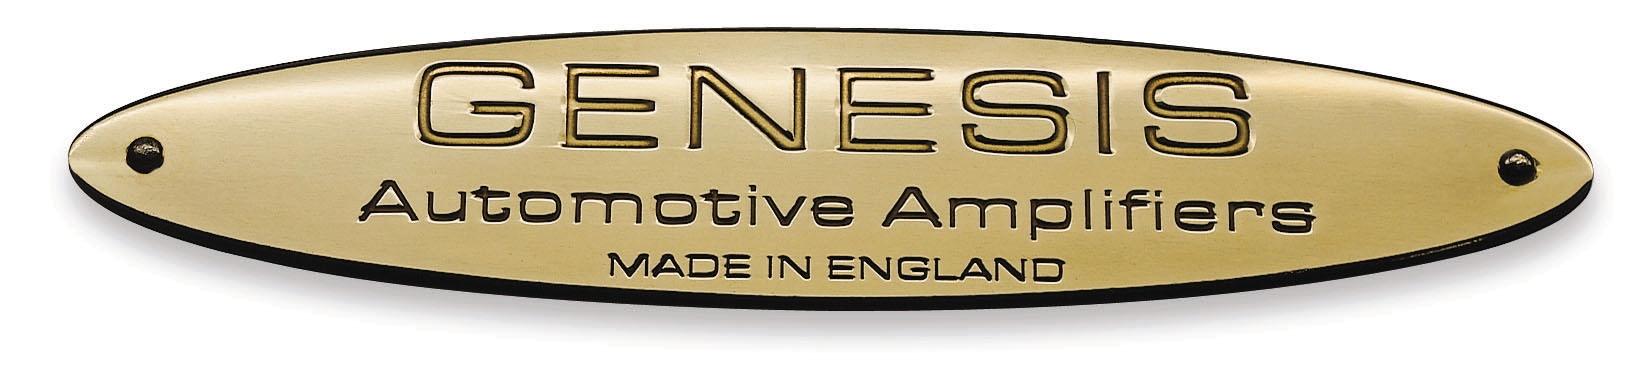 Brand: Genesis